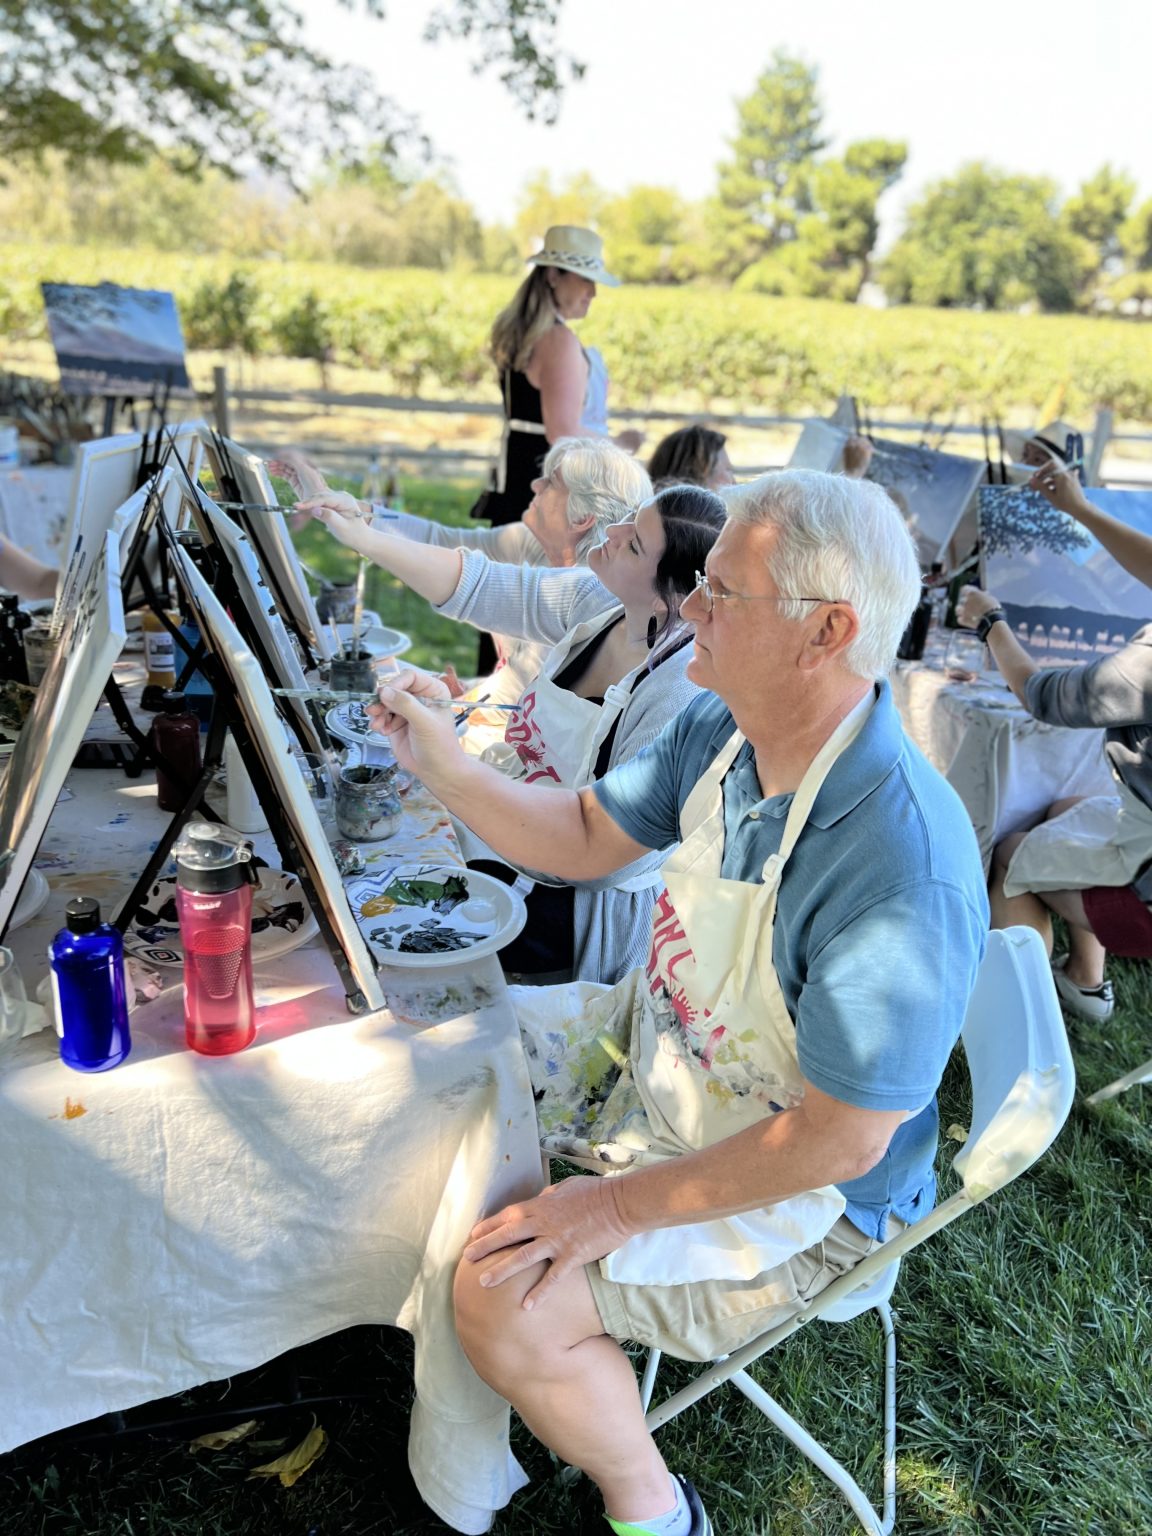 Kaena painting in the vineyard wine tasting activities